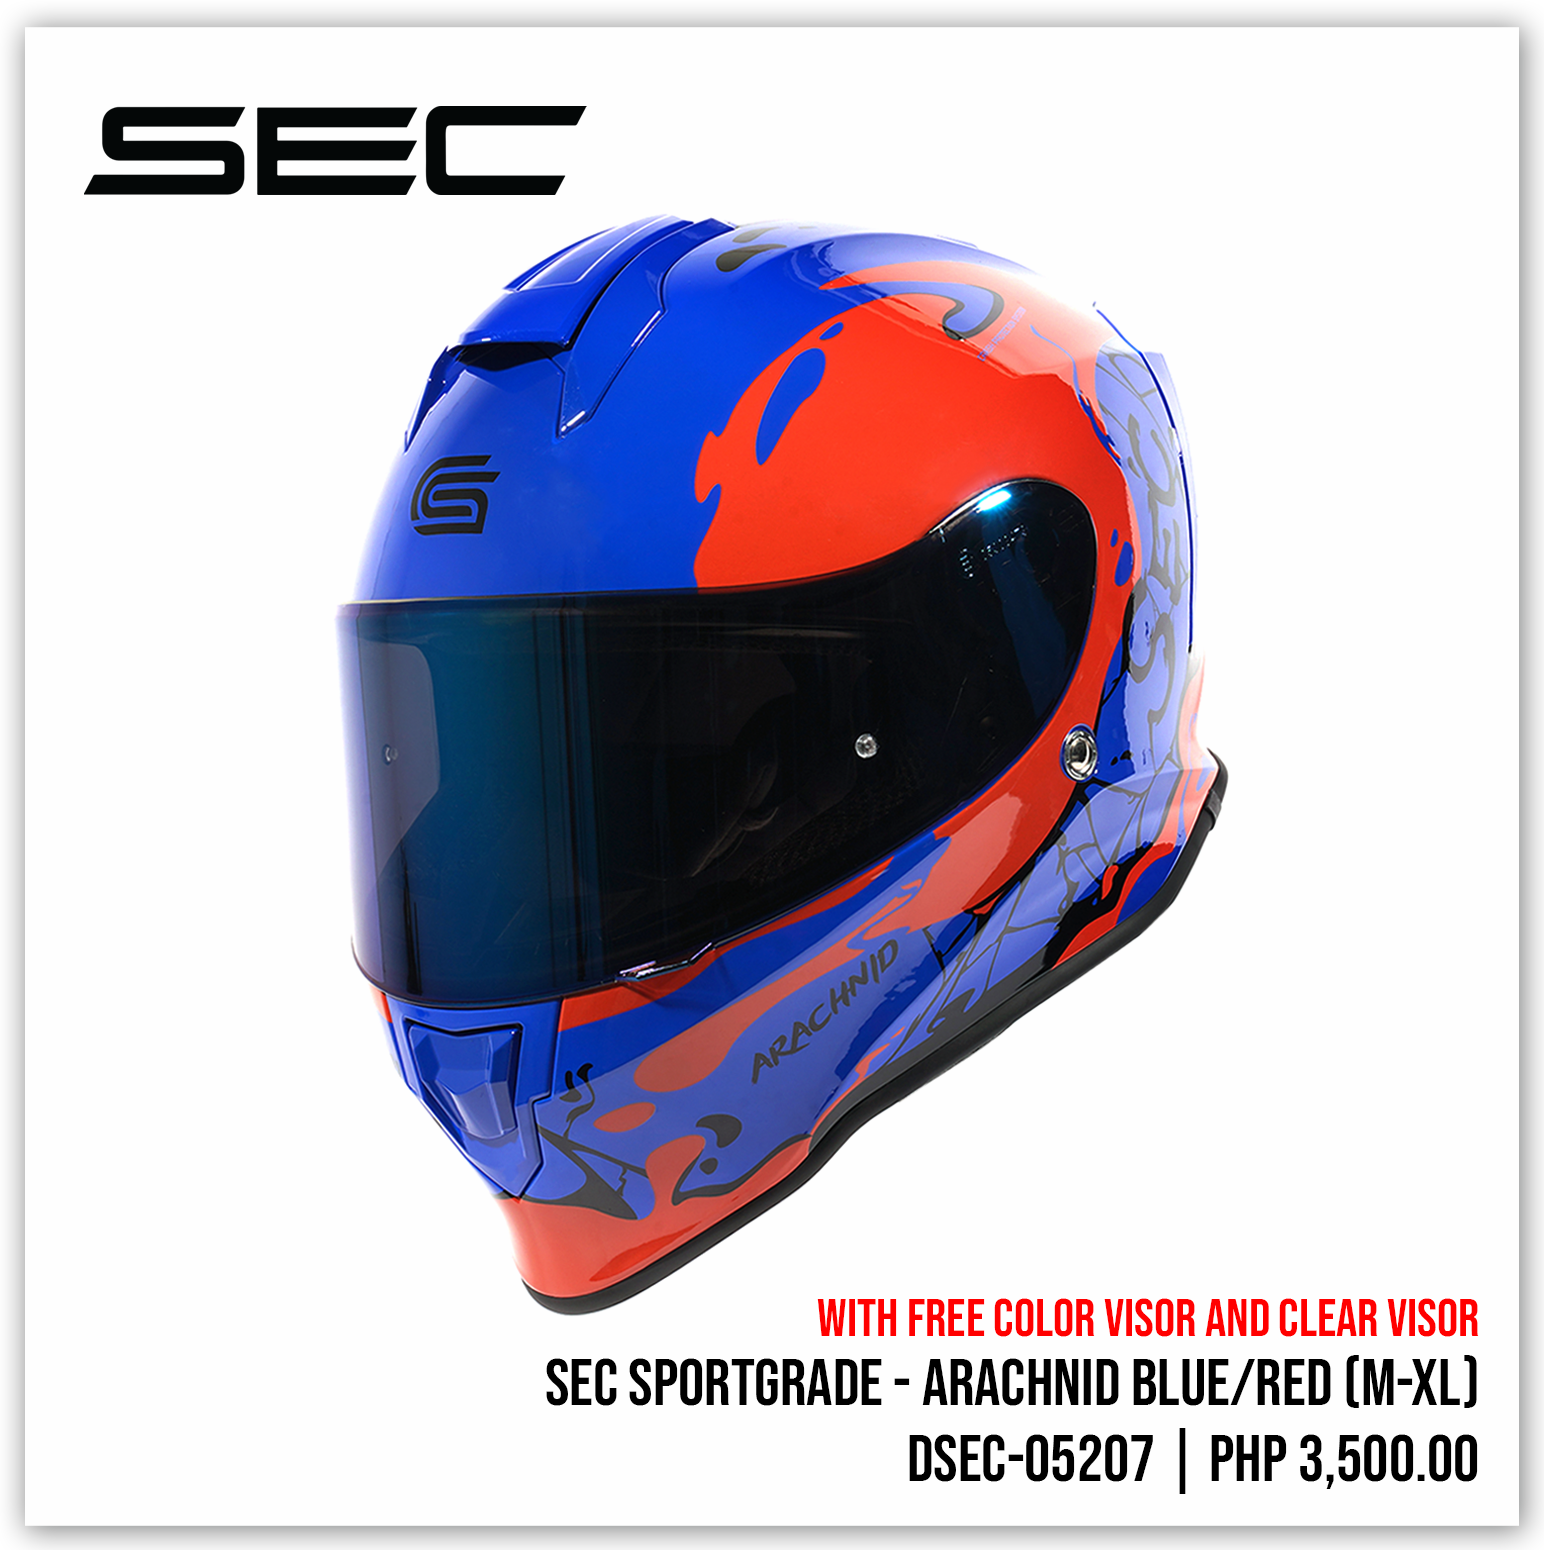 SEC Sportgrade - Arachnid BLU/RED